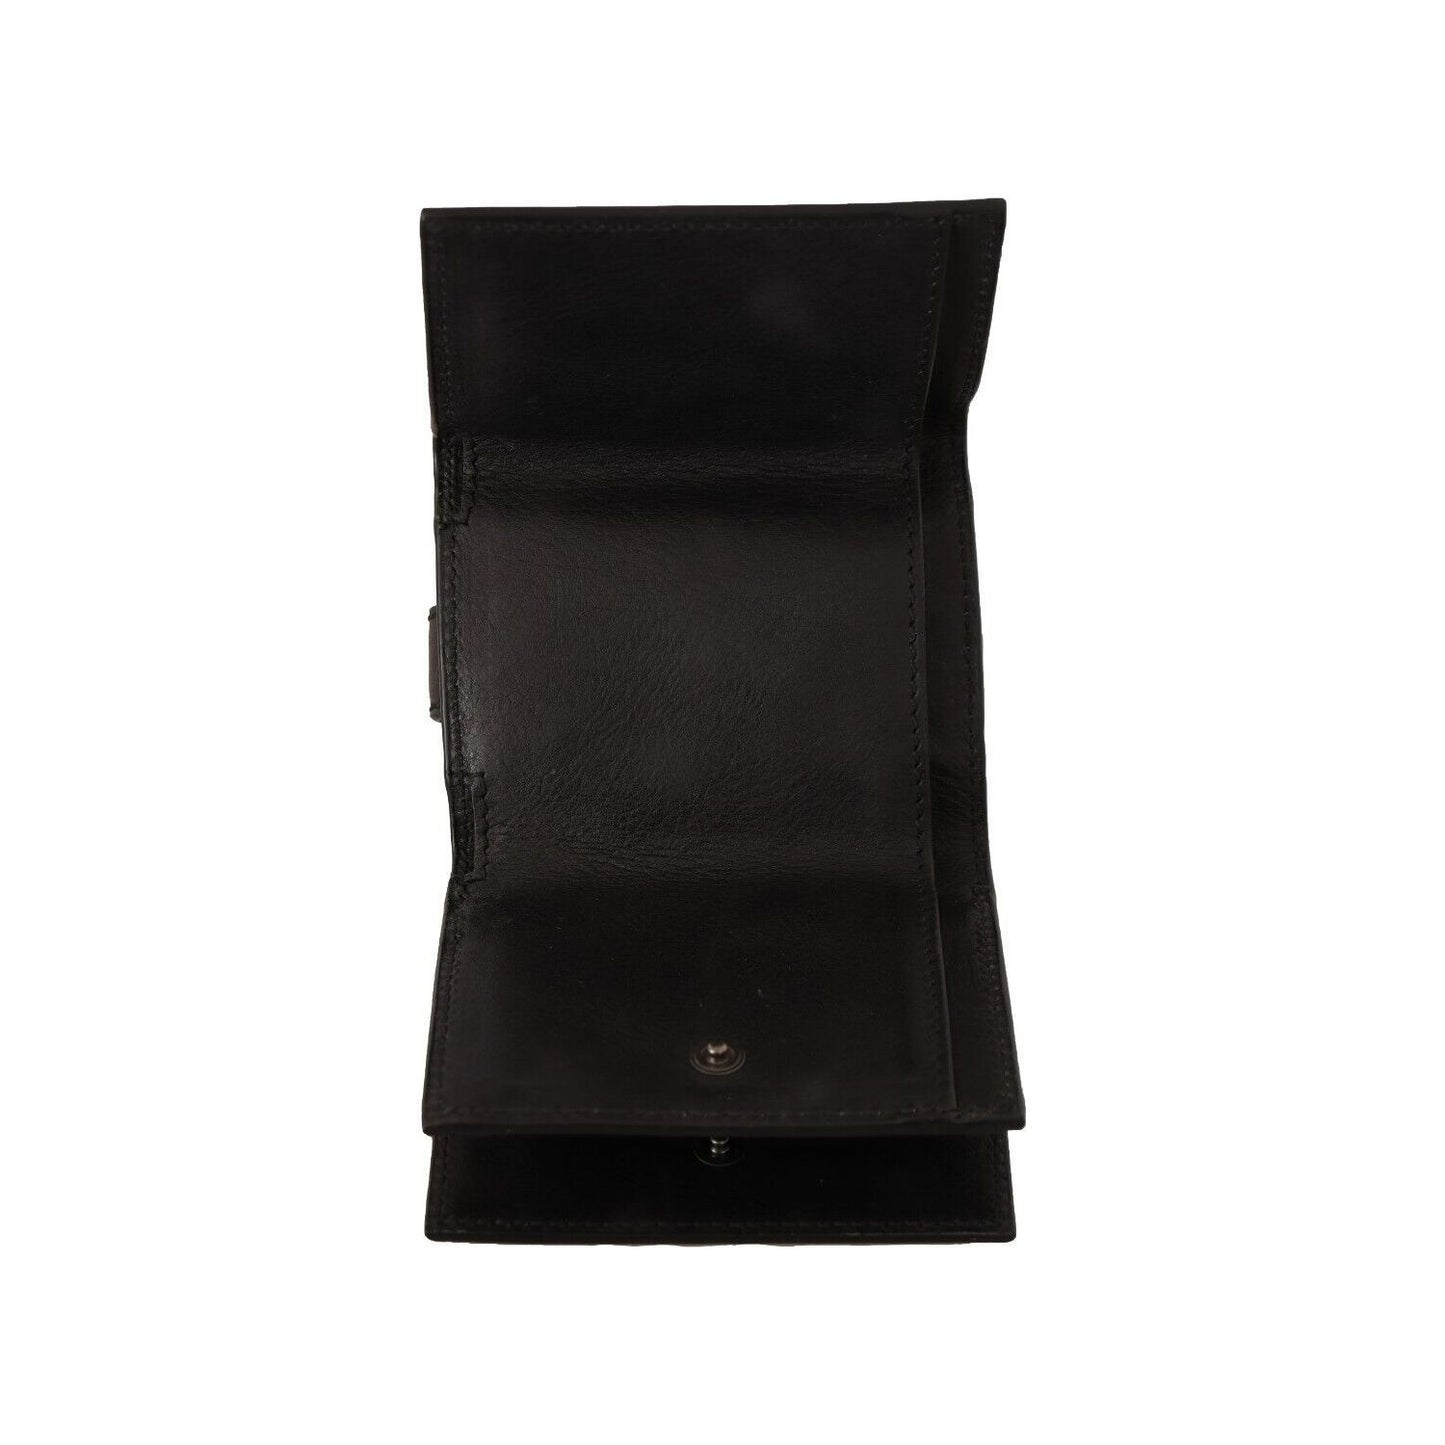 Dolce & GabbanaElegant Leather Trifold Multi Kit with StrapMcRichard Designer Brands£379.00